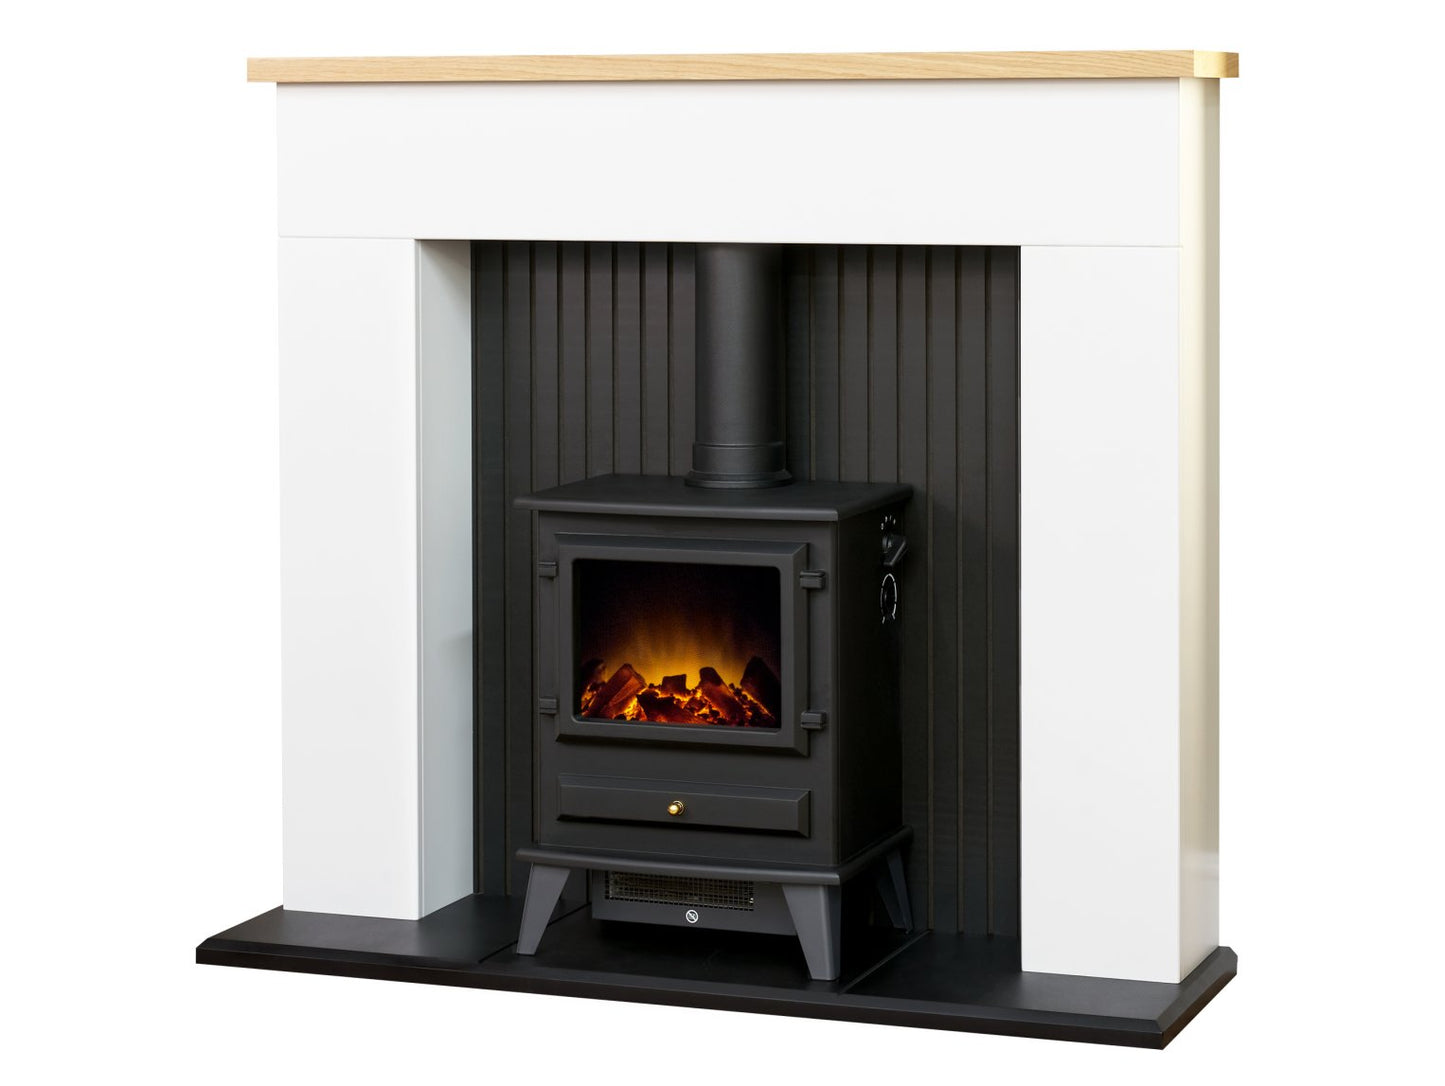 Adam Innsbruck Stove Fireplace Pure White + Hudson Electric Stove Black, 48"